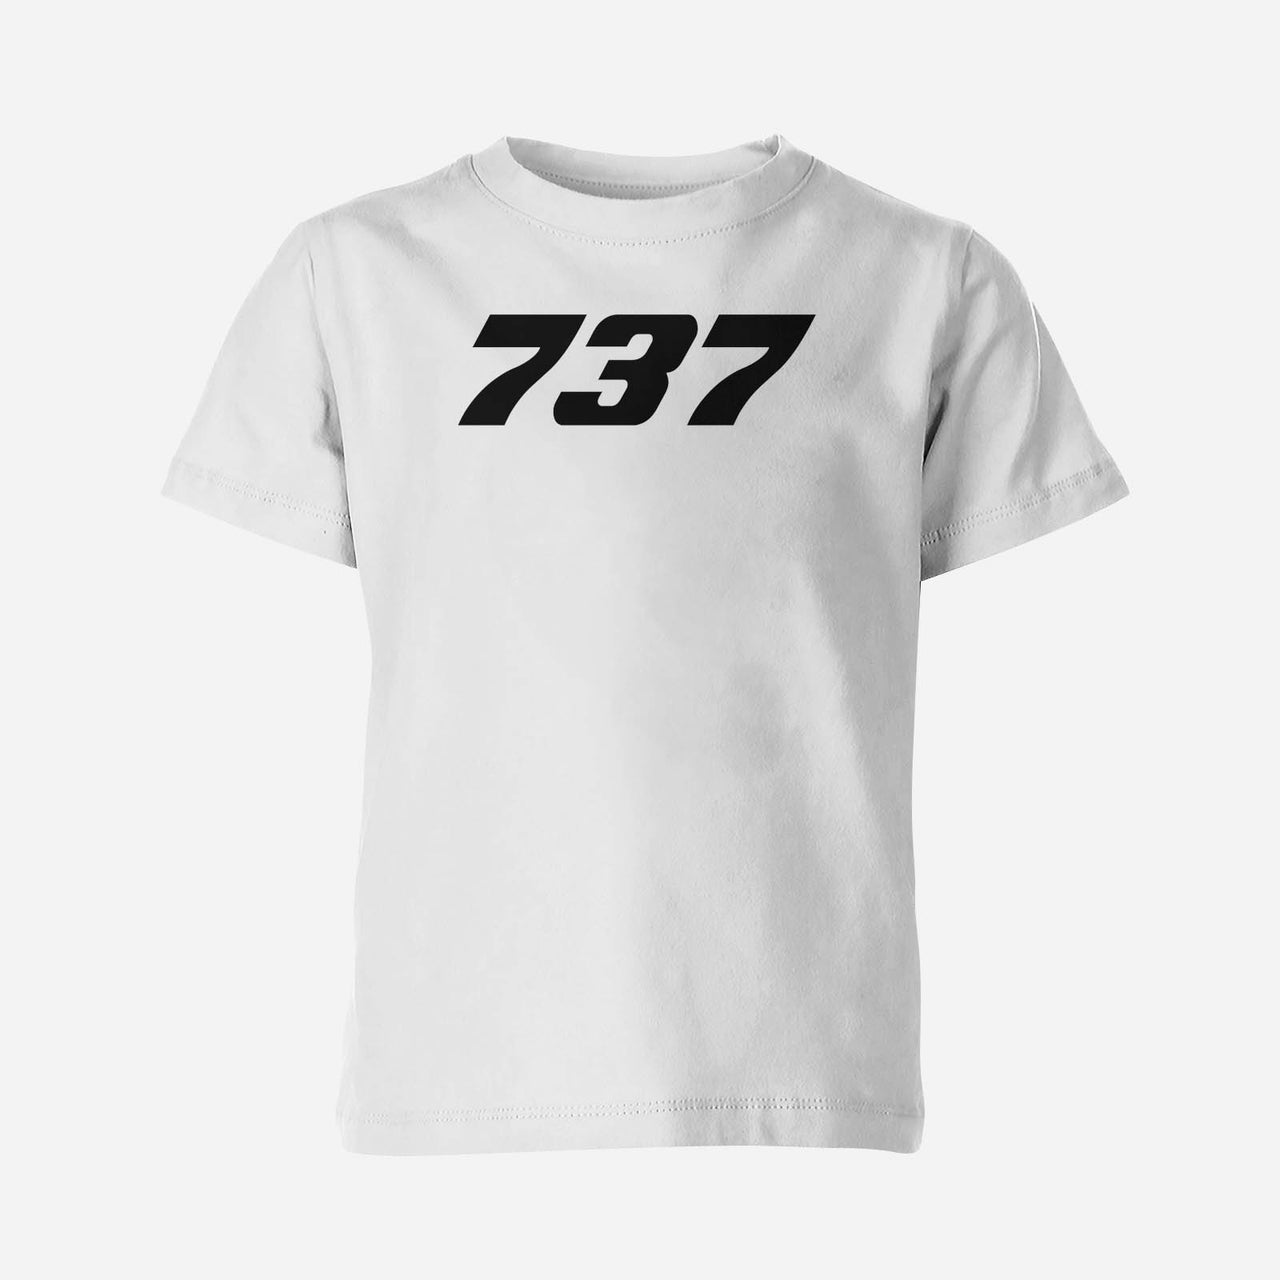 737 Flat Text Designed Children T-Shirts